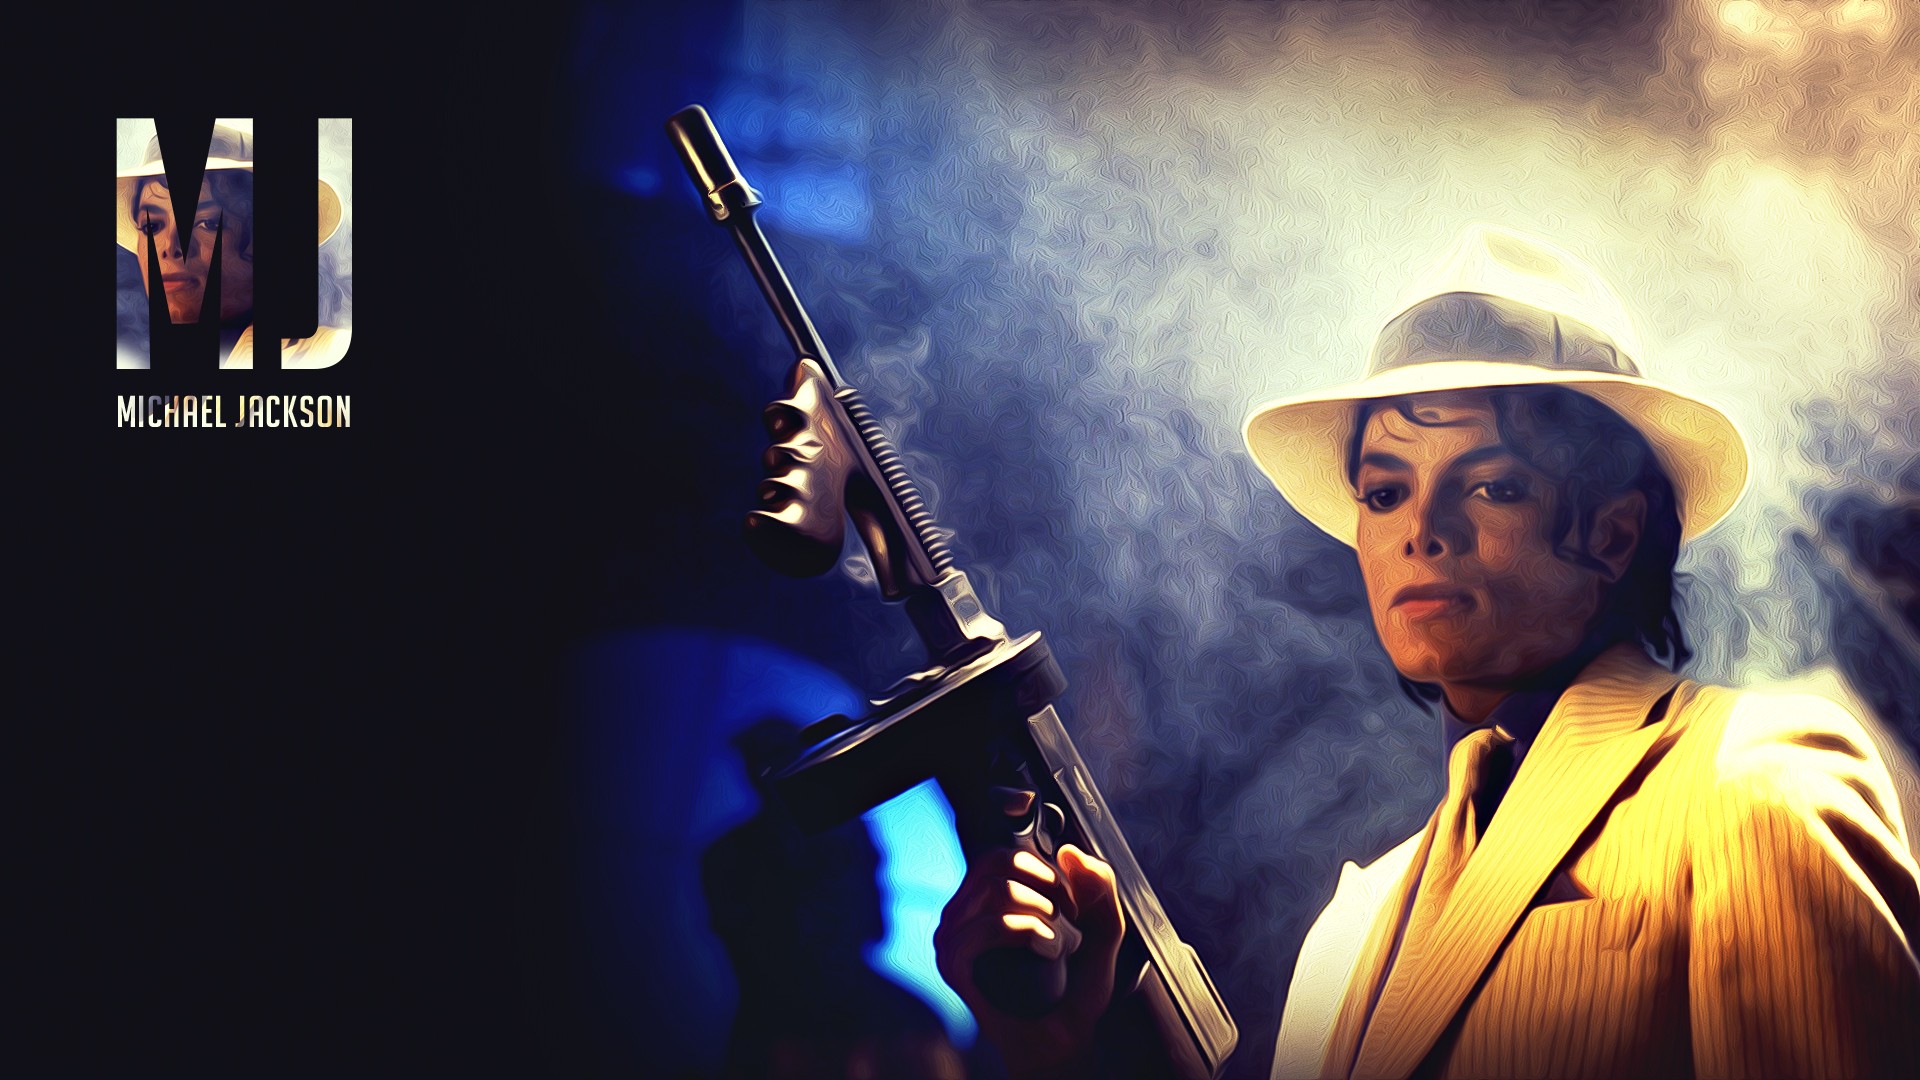 People 1920x1080 Michael Jackson pop music tommy gun weapon hat music singer men